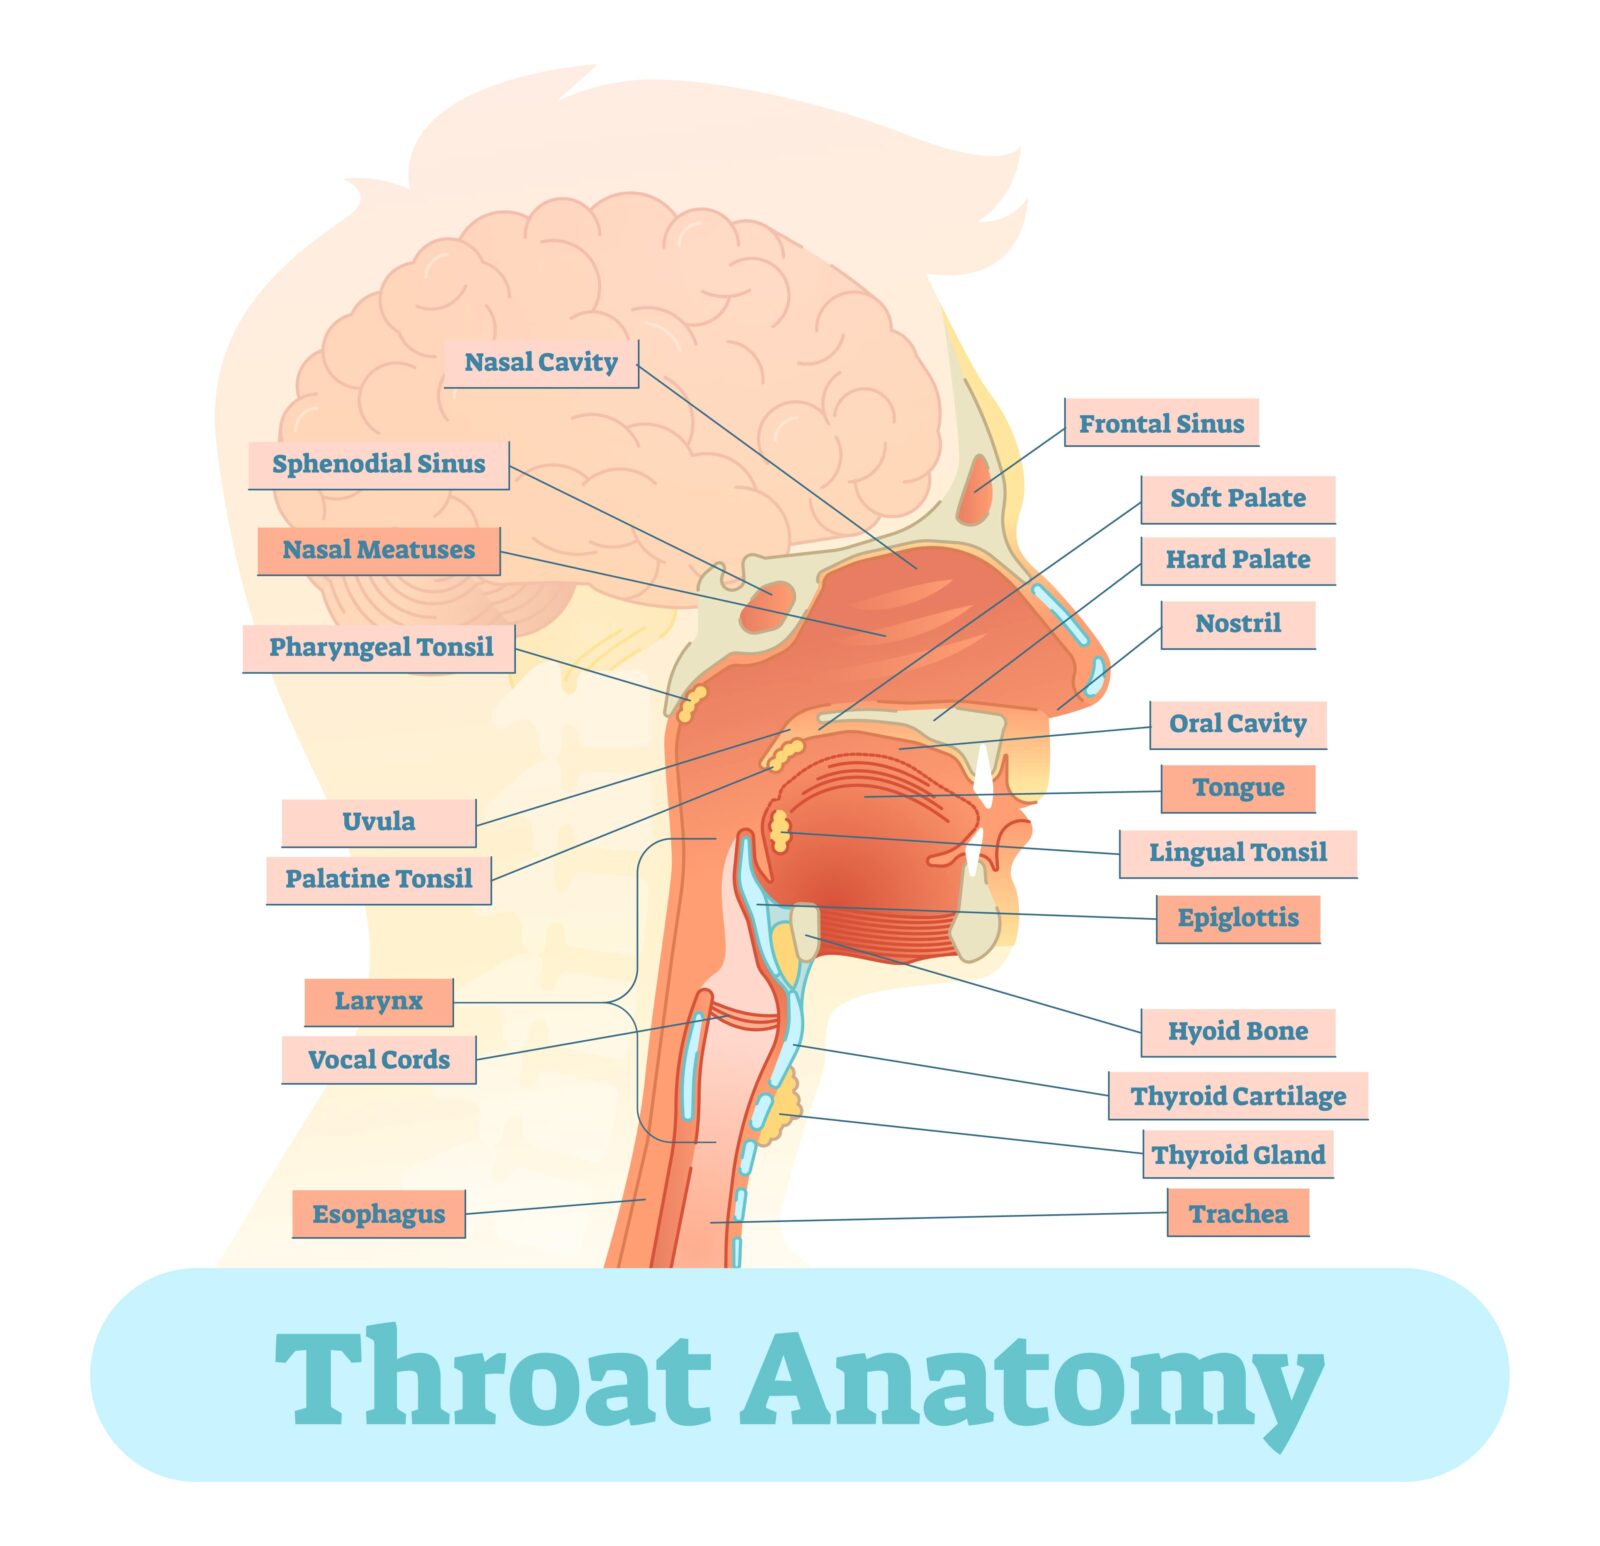 Throat anatomy vector illustration diagram, educational medical scheme.
